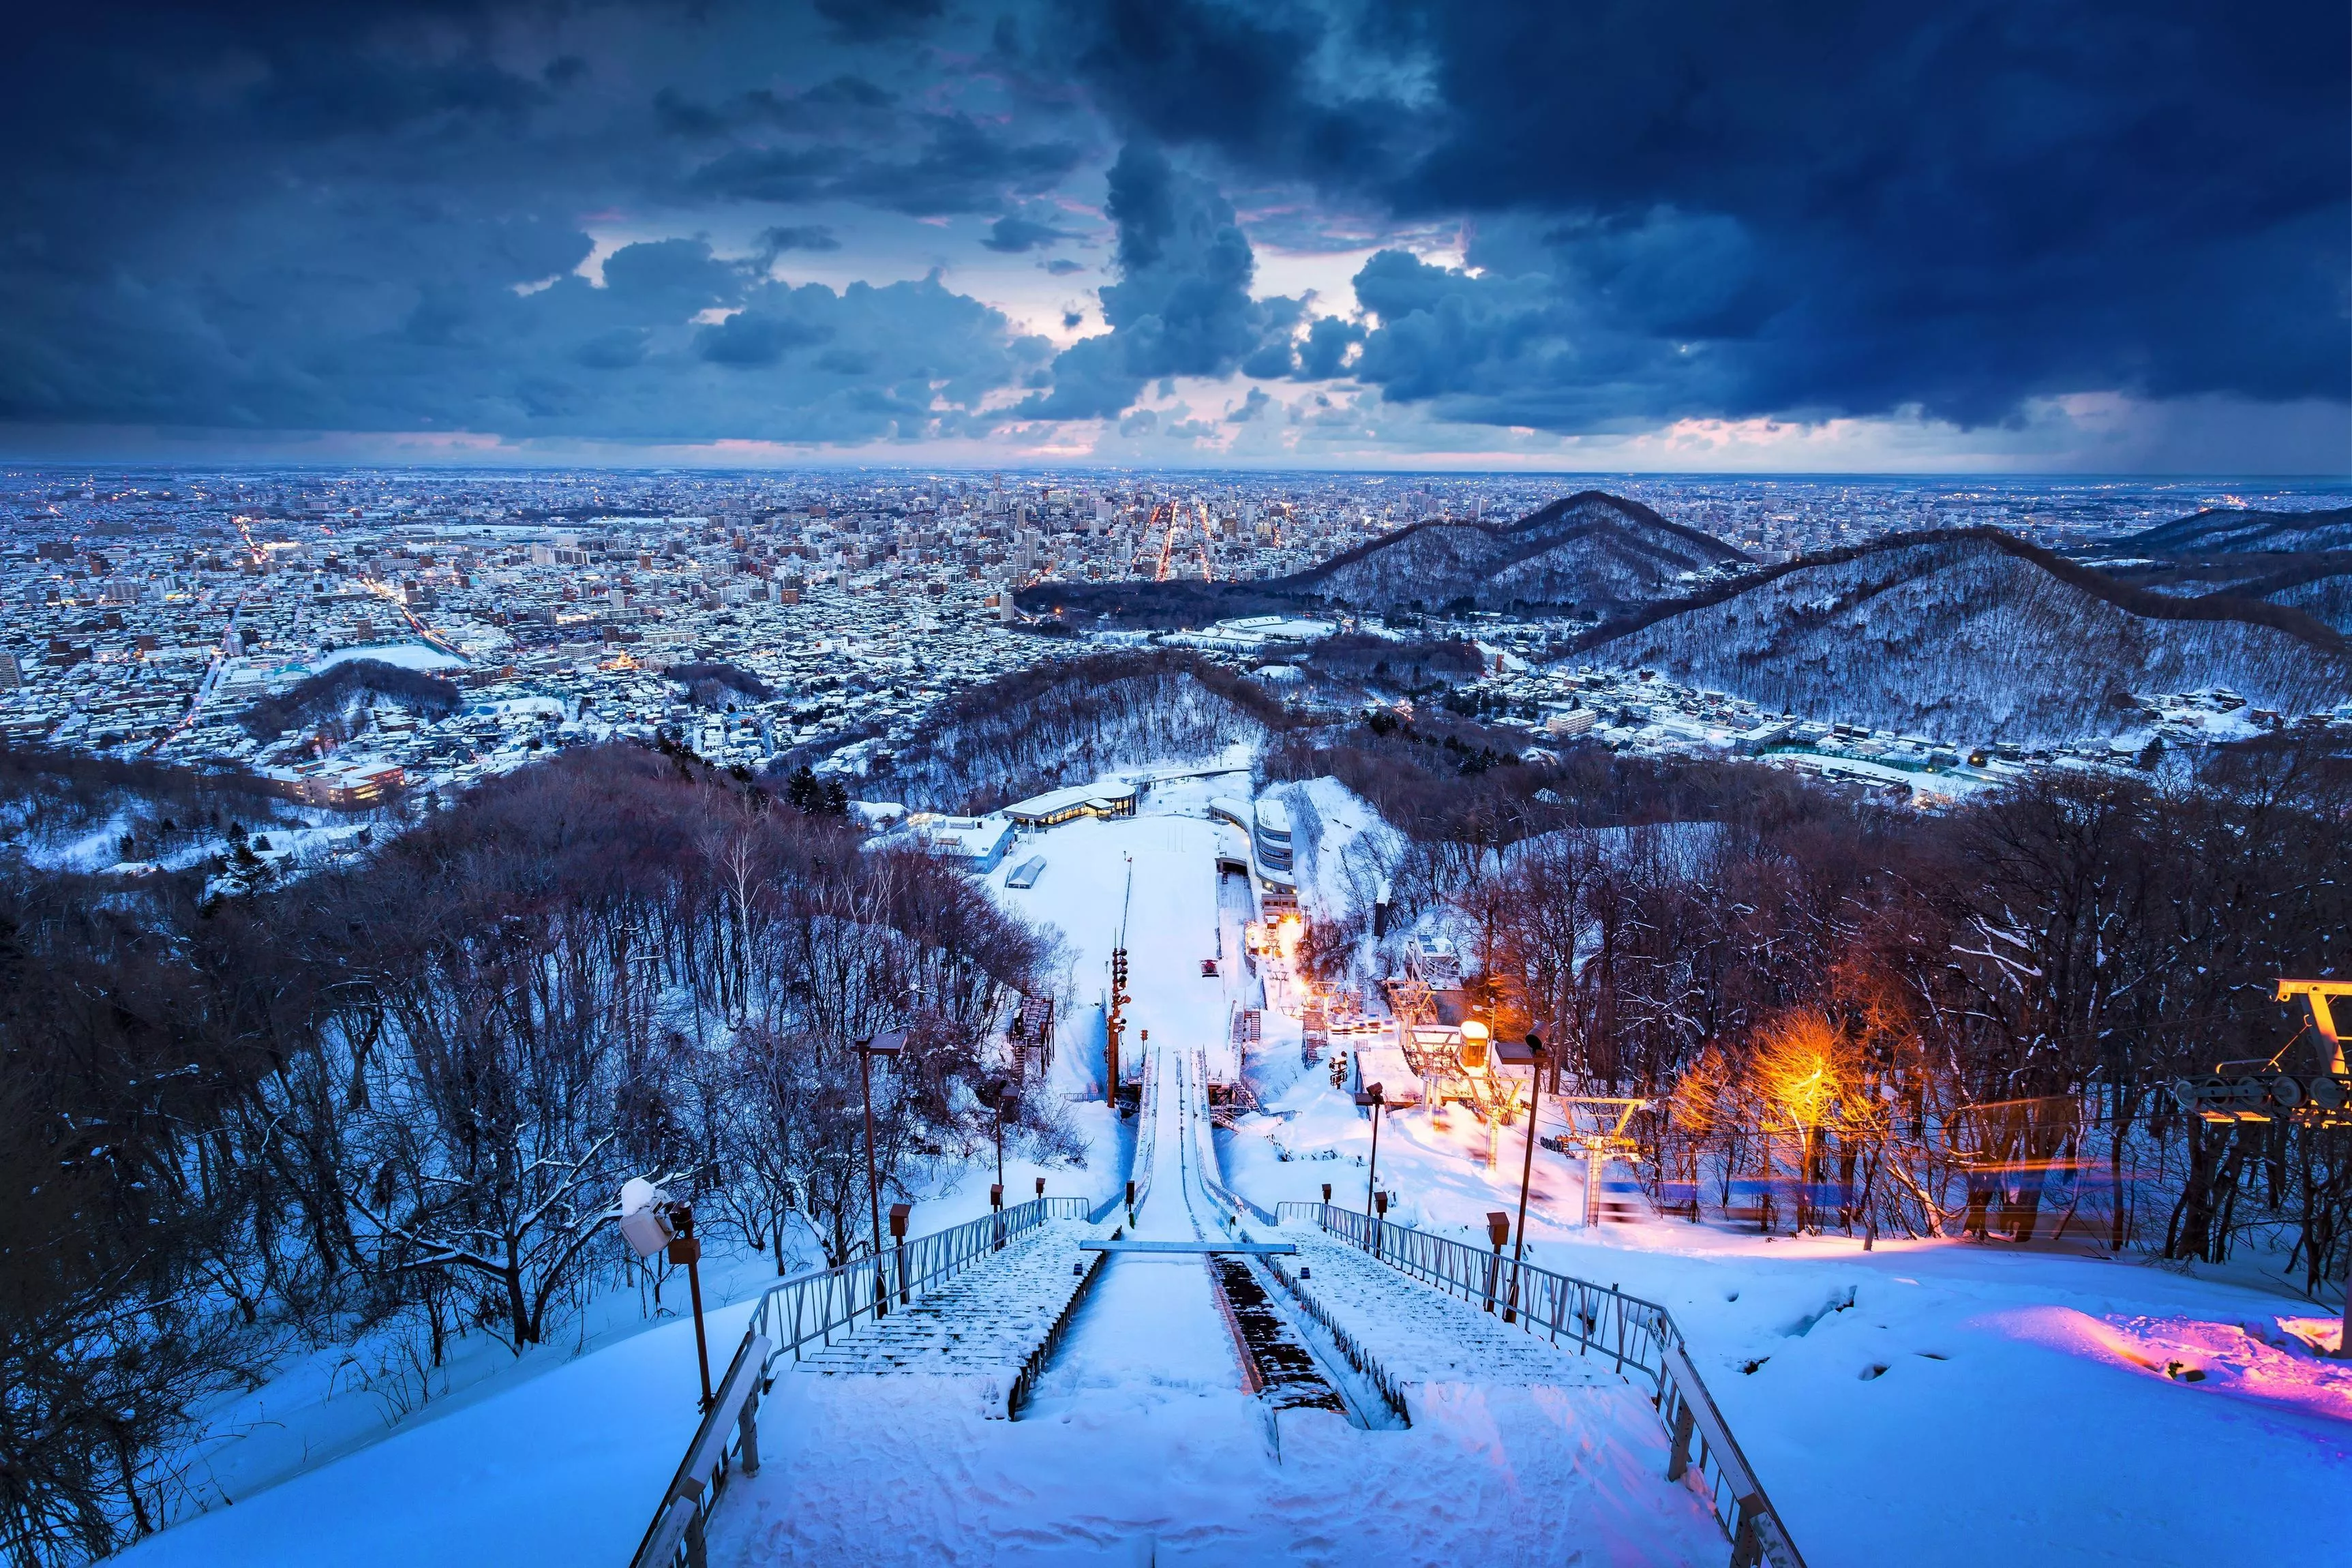 Sapporo Mt. Moiwa Ski Resort in Japan, East Asia | Snowboarding,Skiing - Rated 3.2